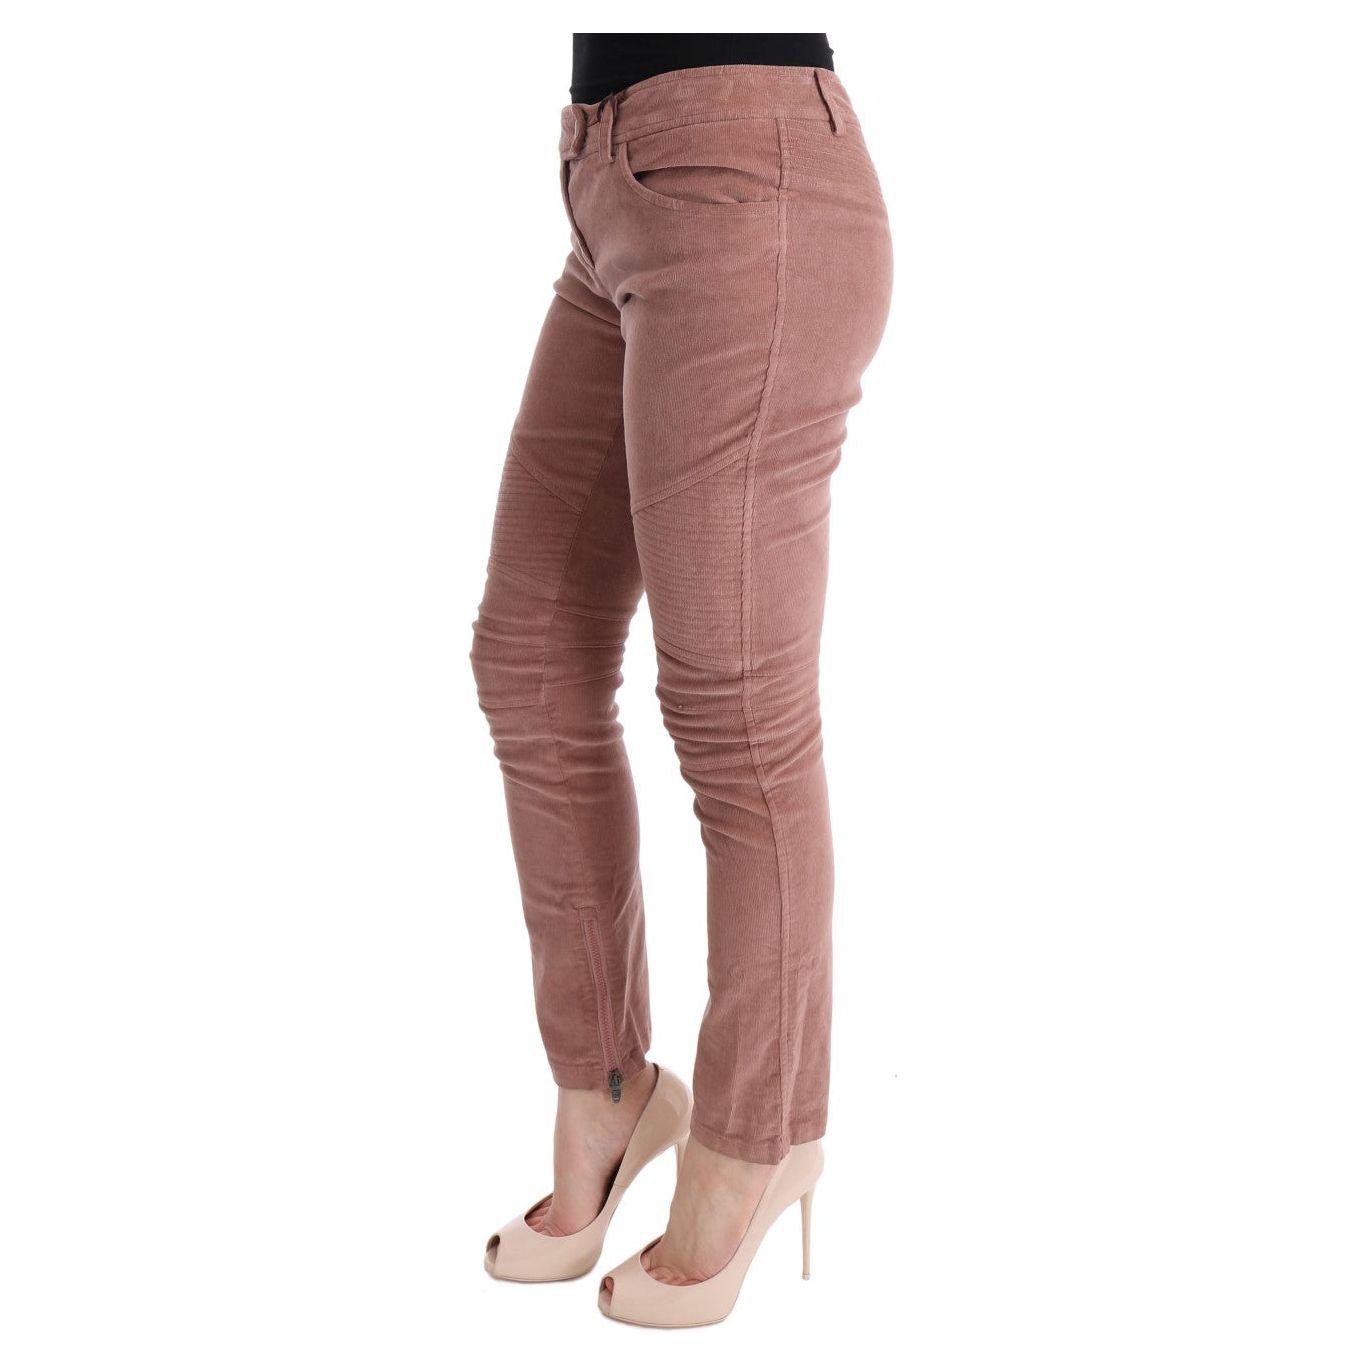 Ermanno Scervino Chic Brown Capri Cropped Pants for Elegant Evenings pink-velvet-cropped-casual-pants 449249-pink-velvet-cropped-casual-pants-1.jpg